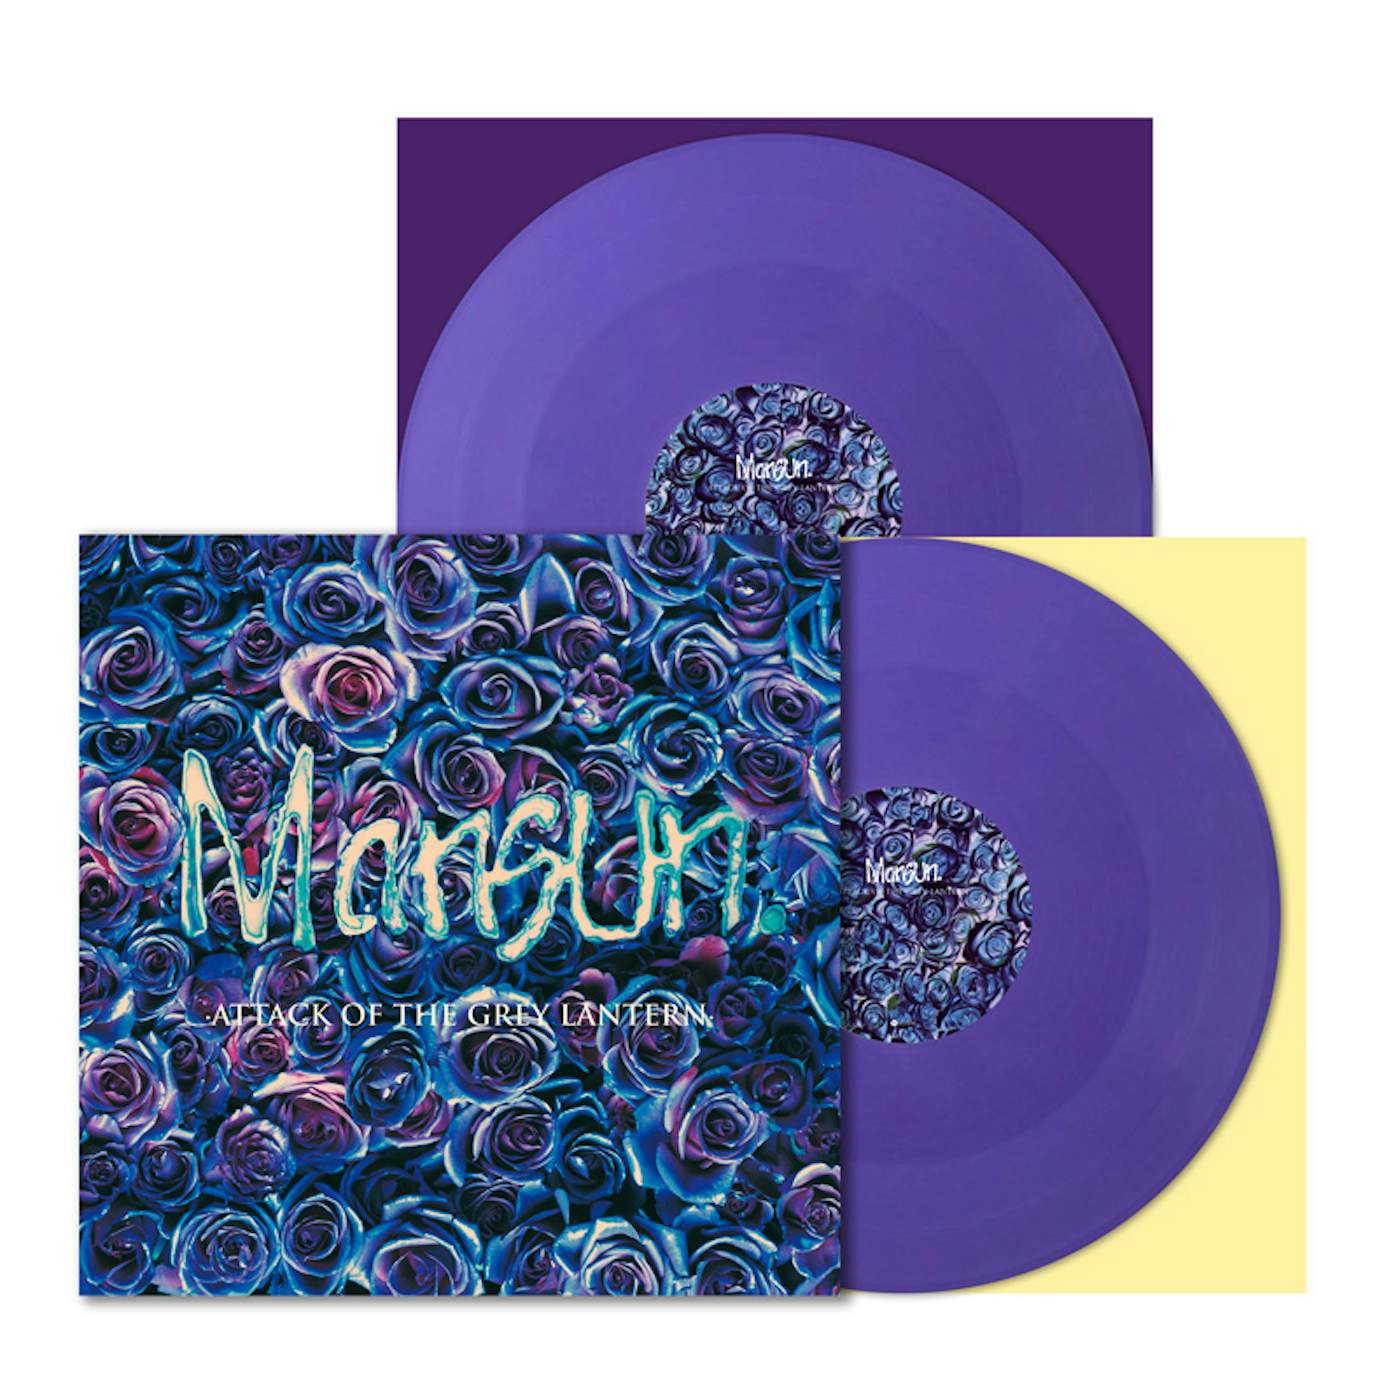 Mansun ATTACK OF THE GREY LANTERN - 180 Gram Purple Colored Double Vinyl Record